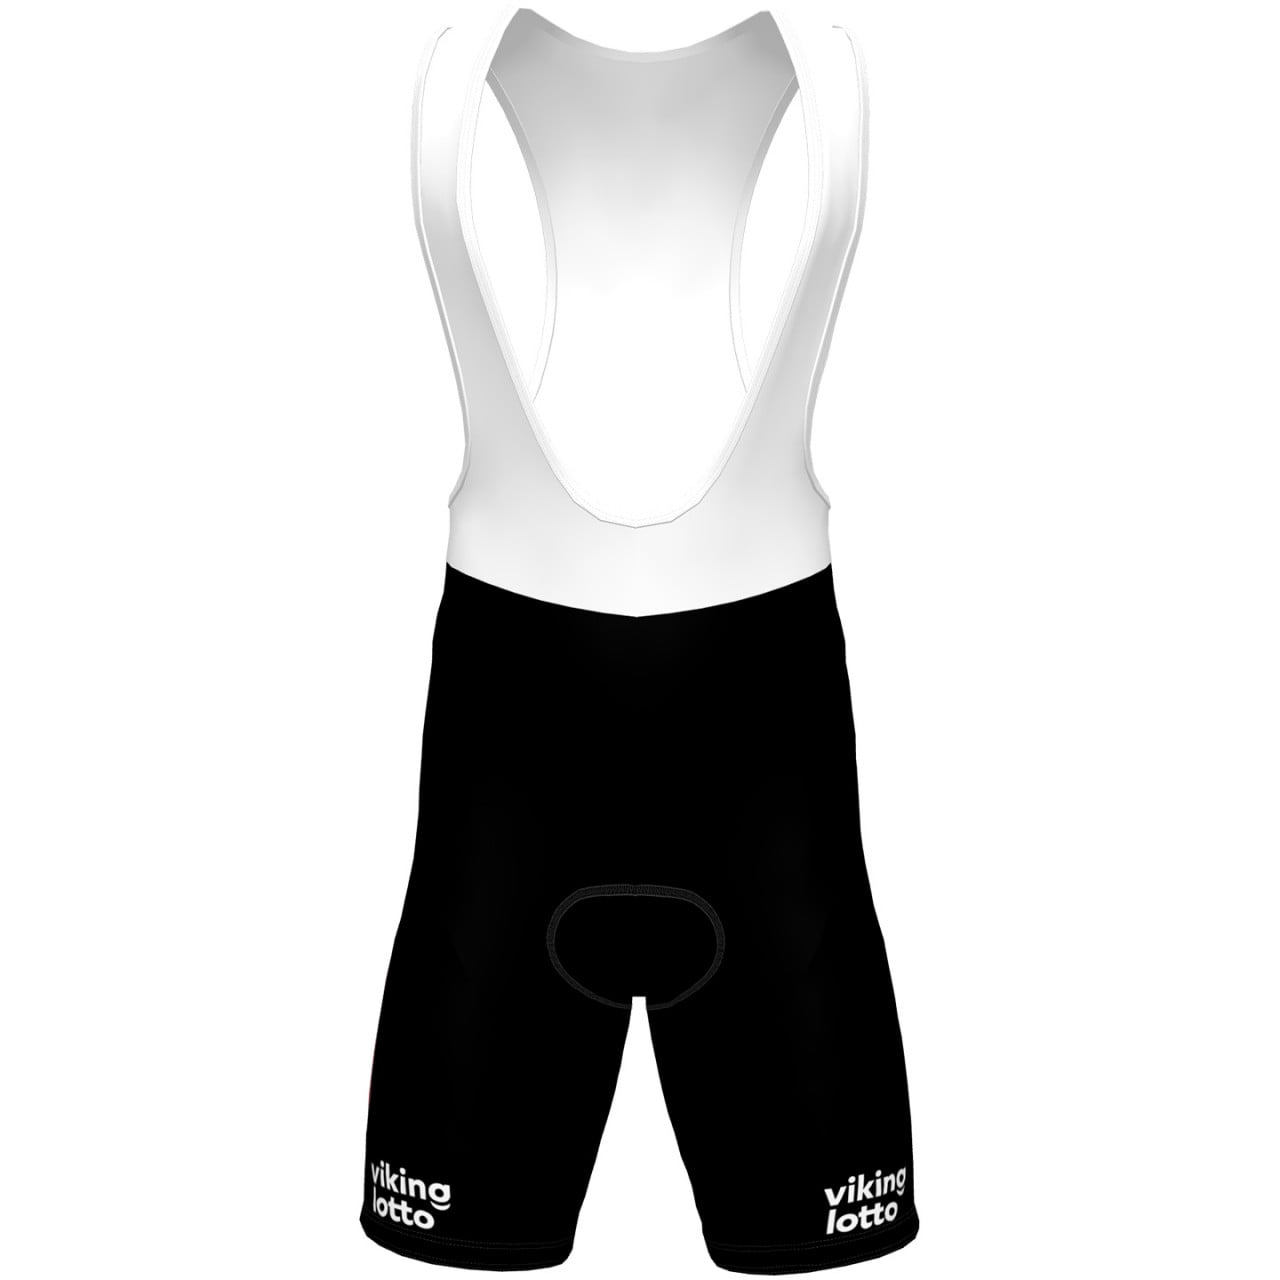 2022 Men's Short Sleeve Cycling Jersey (Bib) Shorts Lotto-2022-001-AC